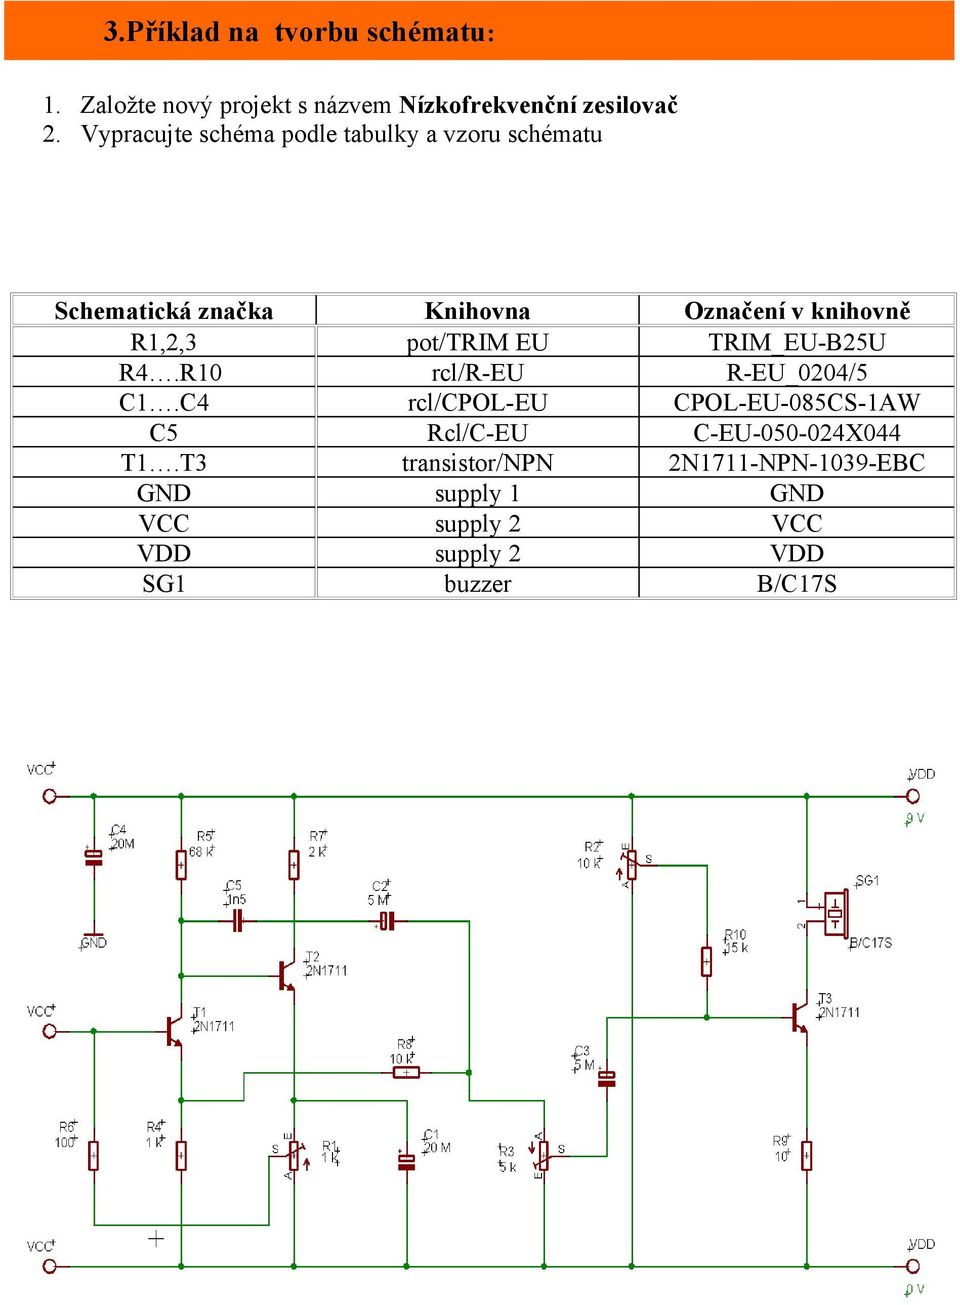 T3 GND VCC VDD SG1 Knihovna pot/trim EU rcl/r-eu rcl/cpol-eu Rcl/C-EU transistor/npn supply 1 supply 2